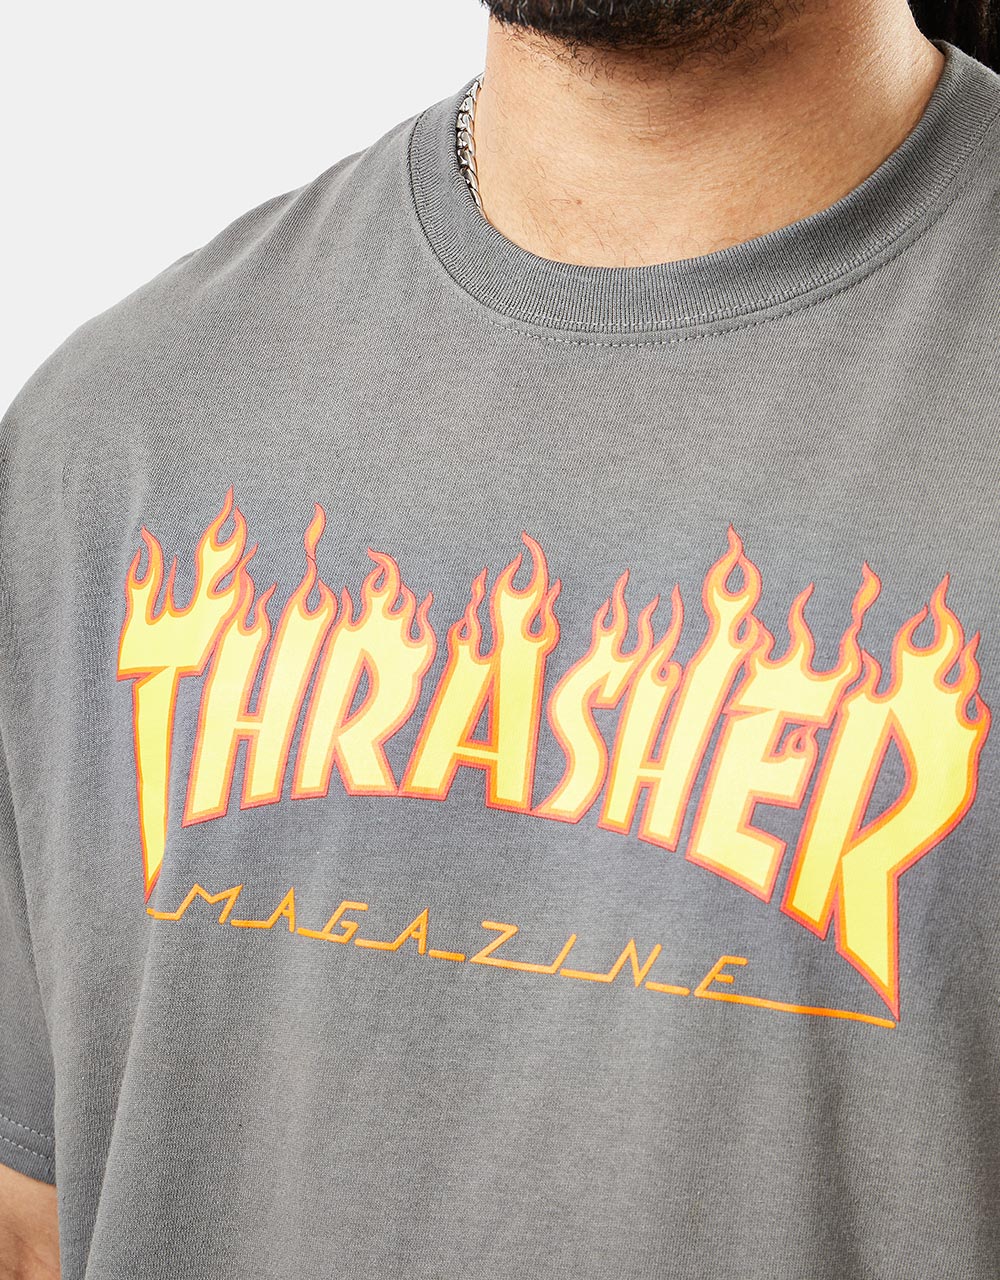 Thrasher Flame Logo T-Shirt - Charcoal